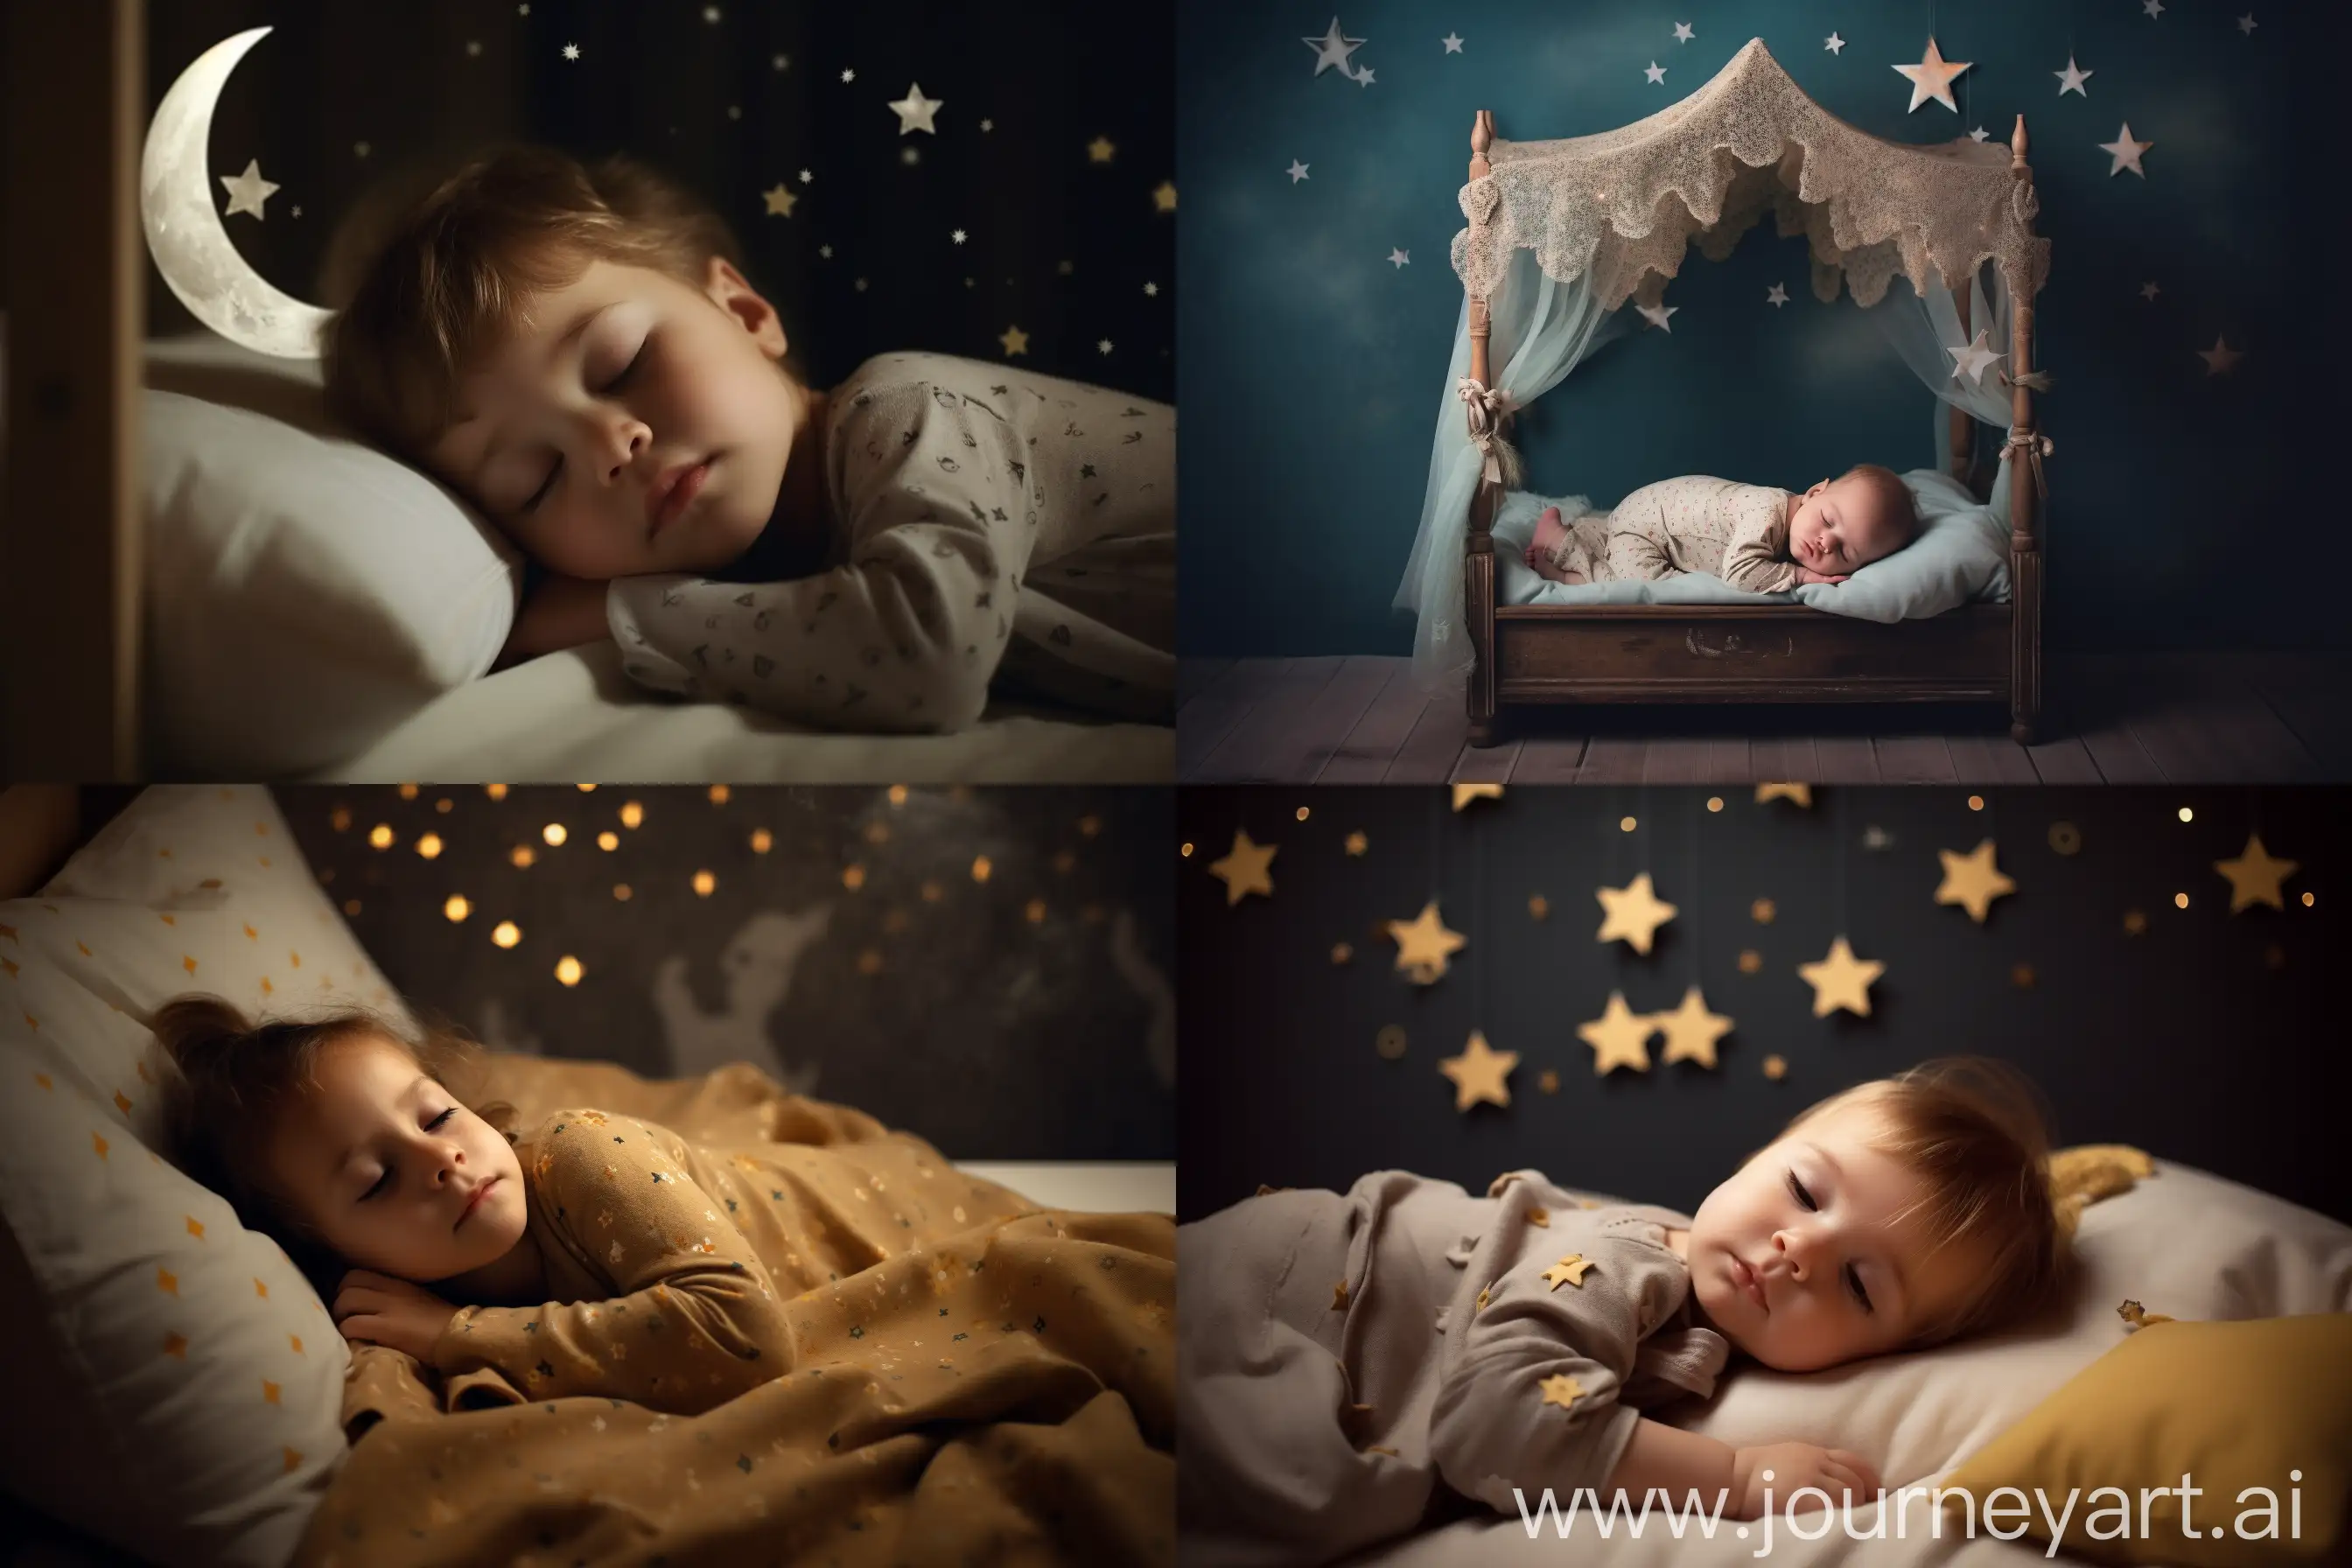 Sleeping-Child-Dreaming-of-Worries-and-Joys-Illustration-in-Surreal-Scandinavian-Folk-Art-Style